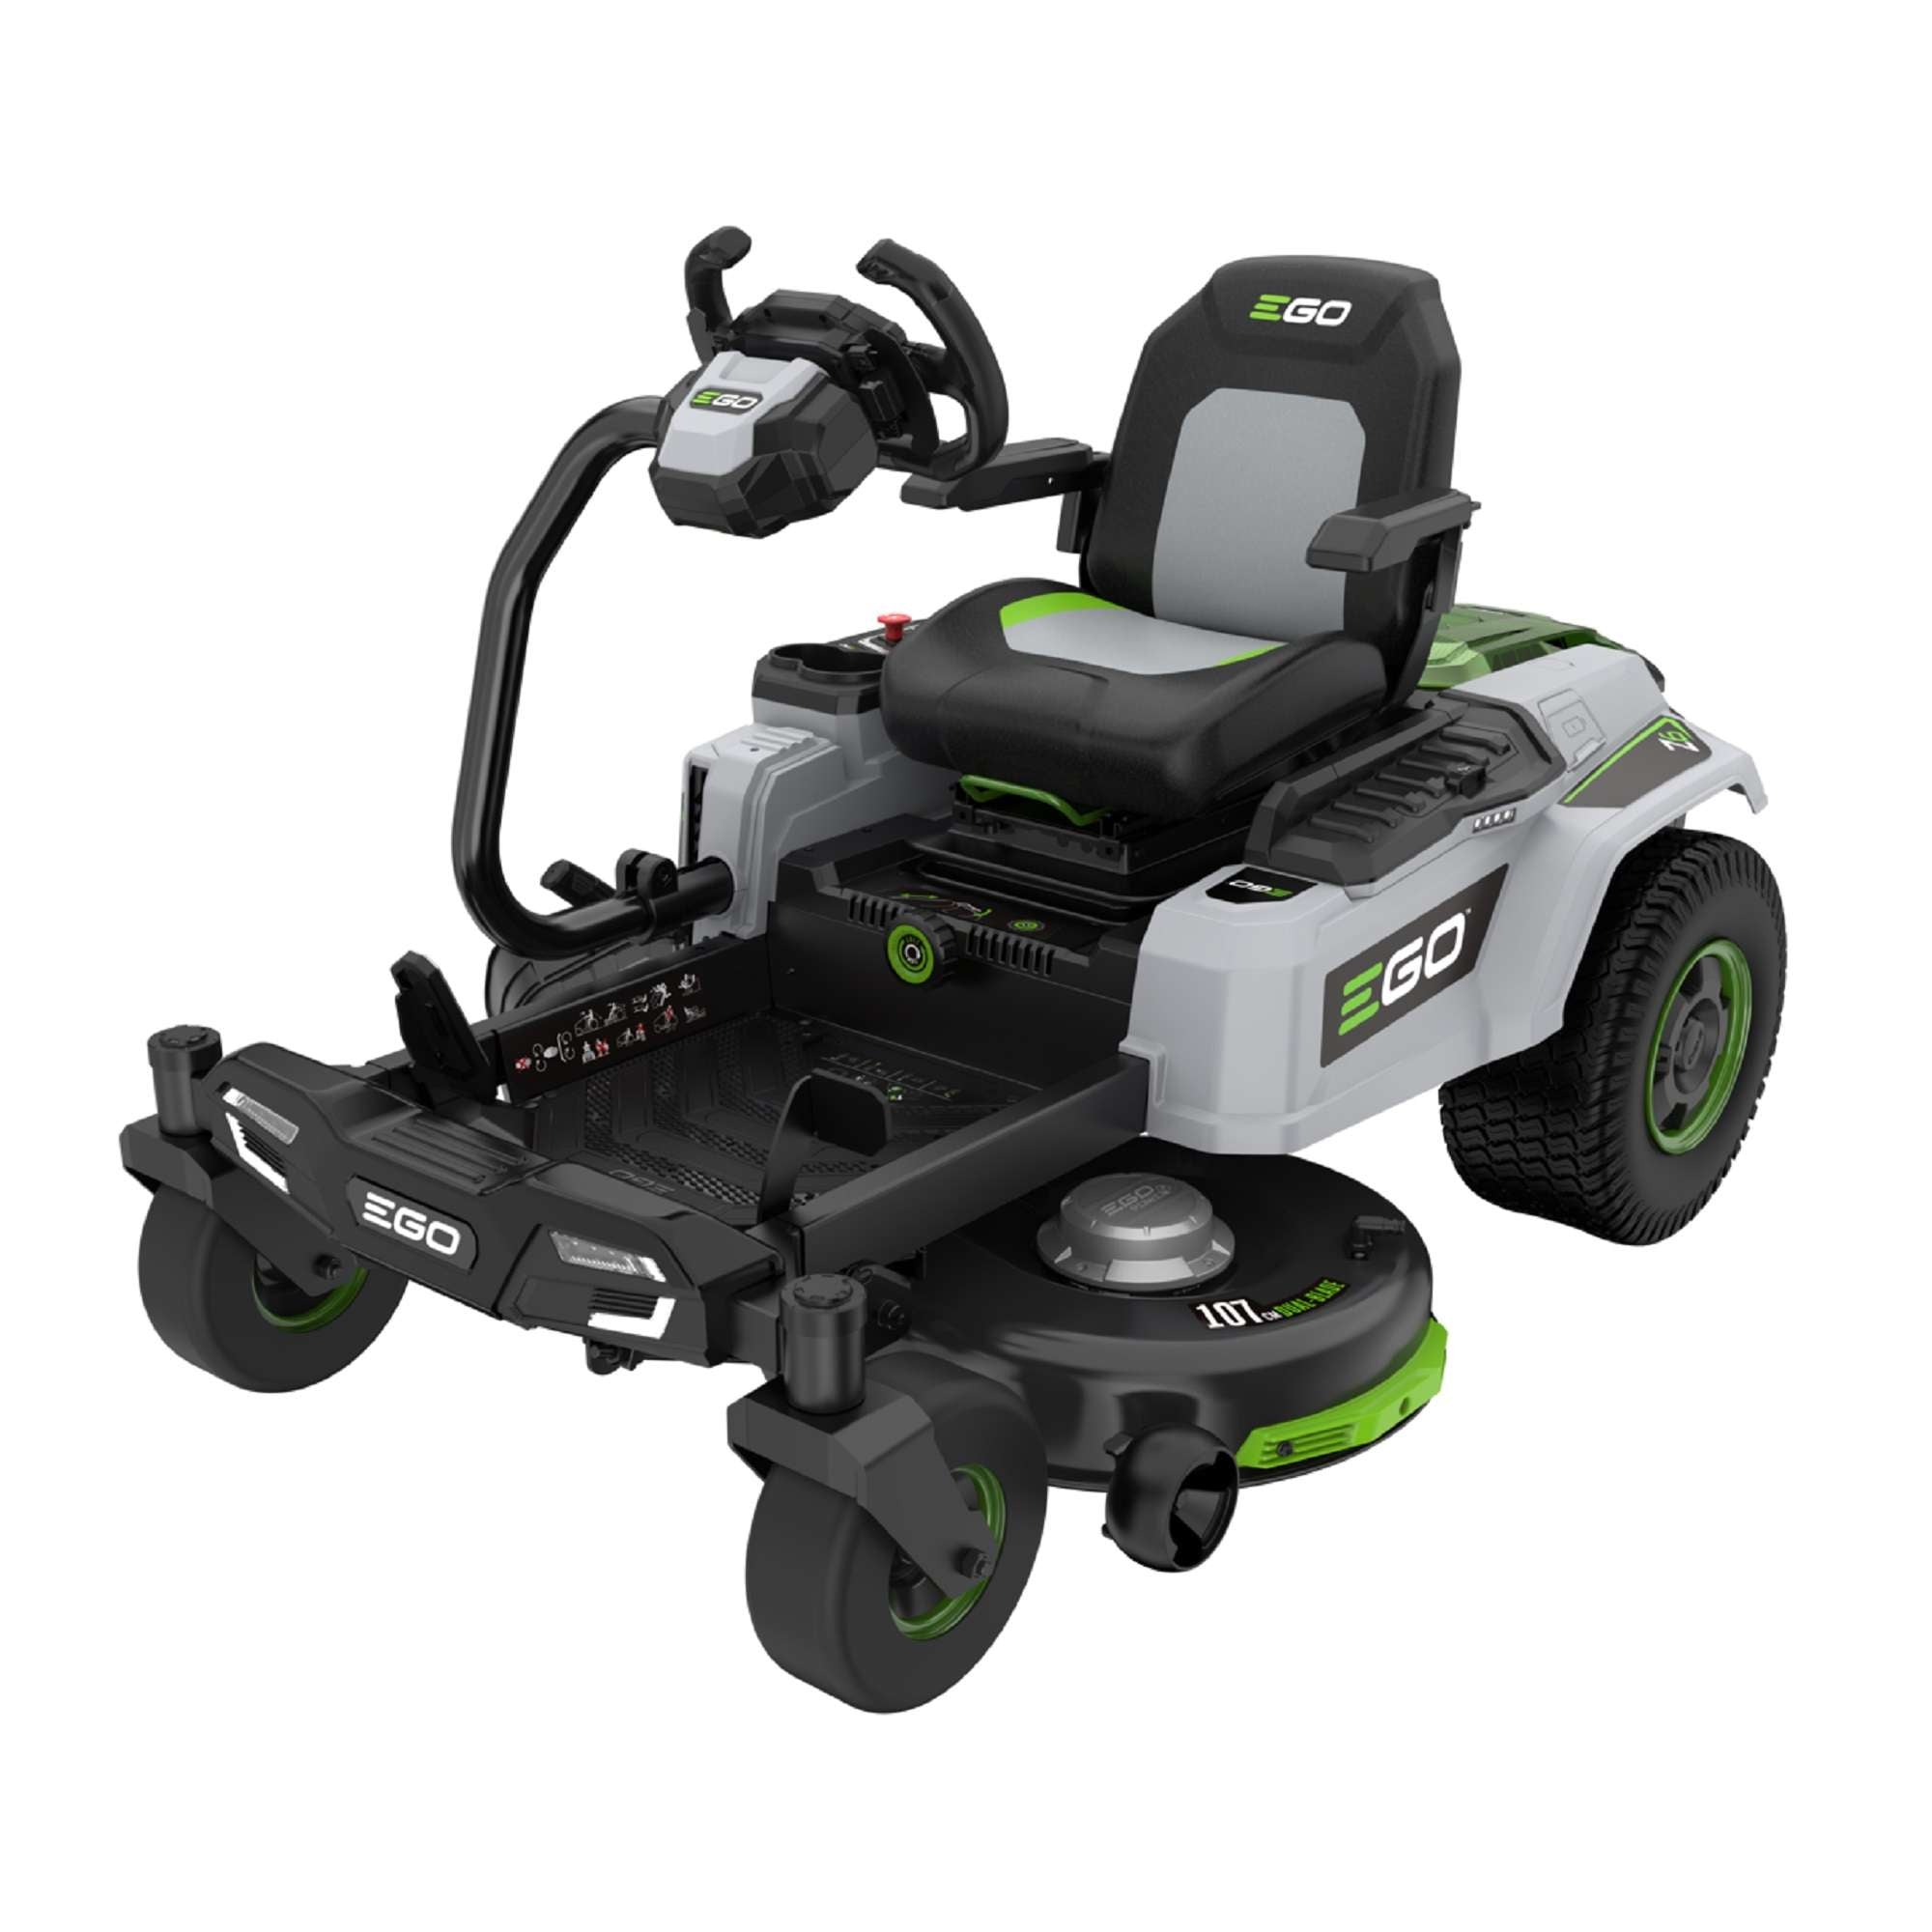 Z6 ZERO TURN cordless lawn tractor + 10.0AH battery + 5.0AH battery - Ego 58550 ZT4201E-S